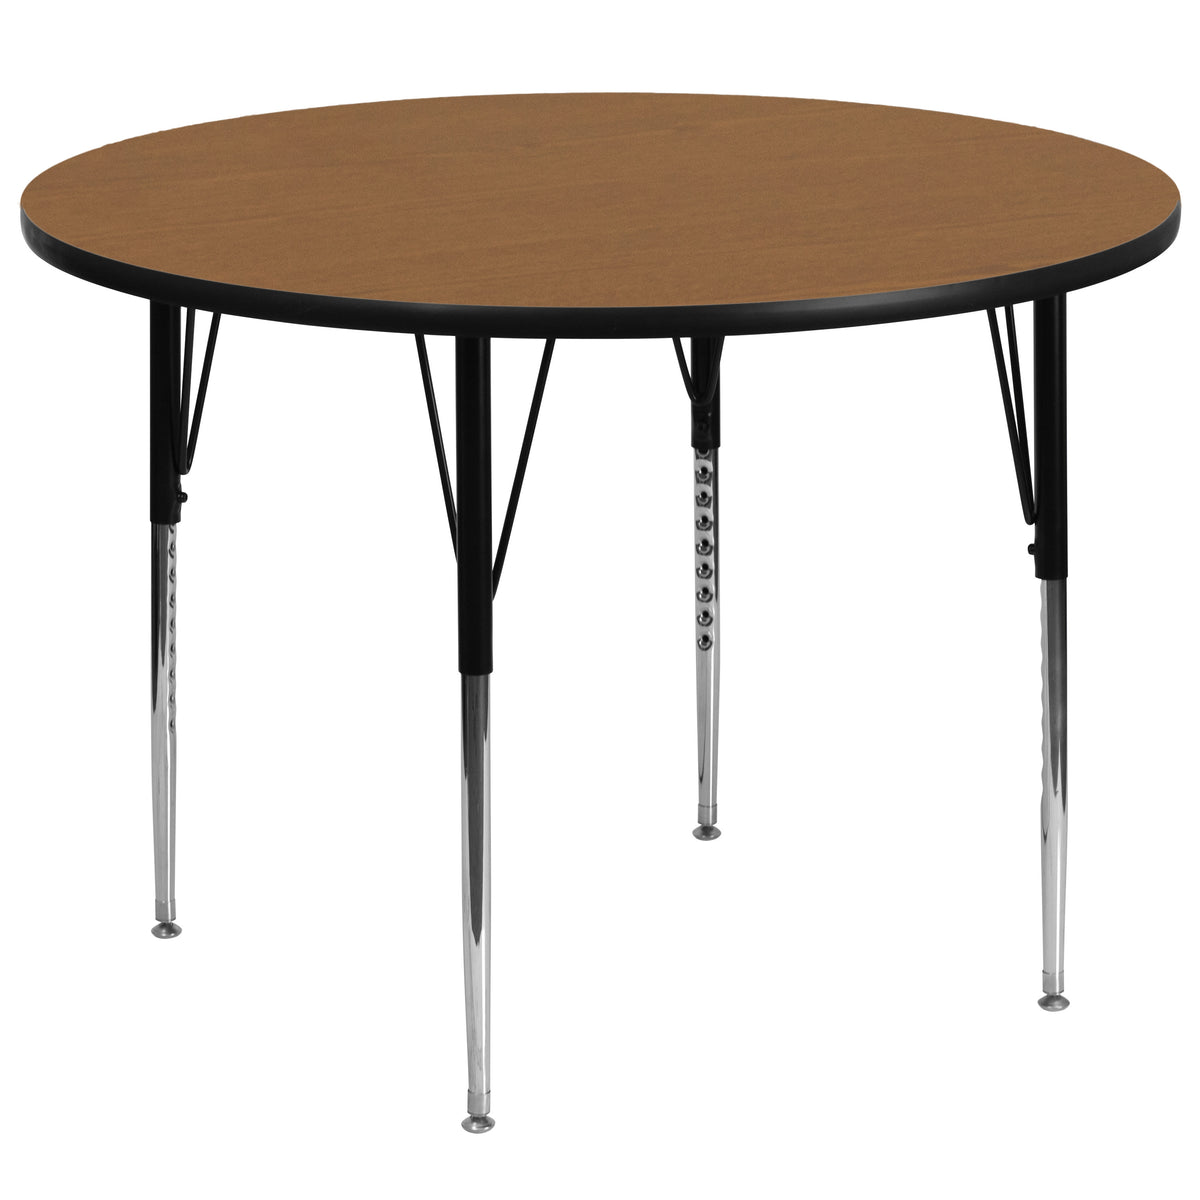 Oak |#| 60inch Round Oak Thermal Laminate Activity Table - Standard Height Adjustable Legs